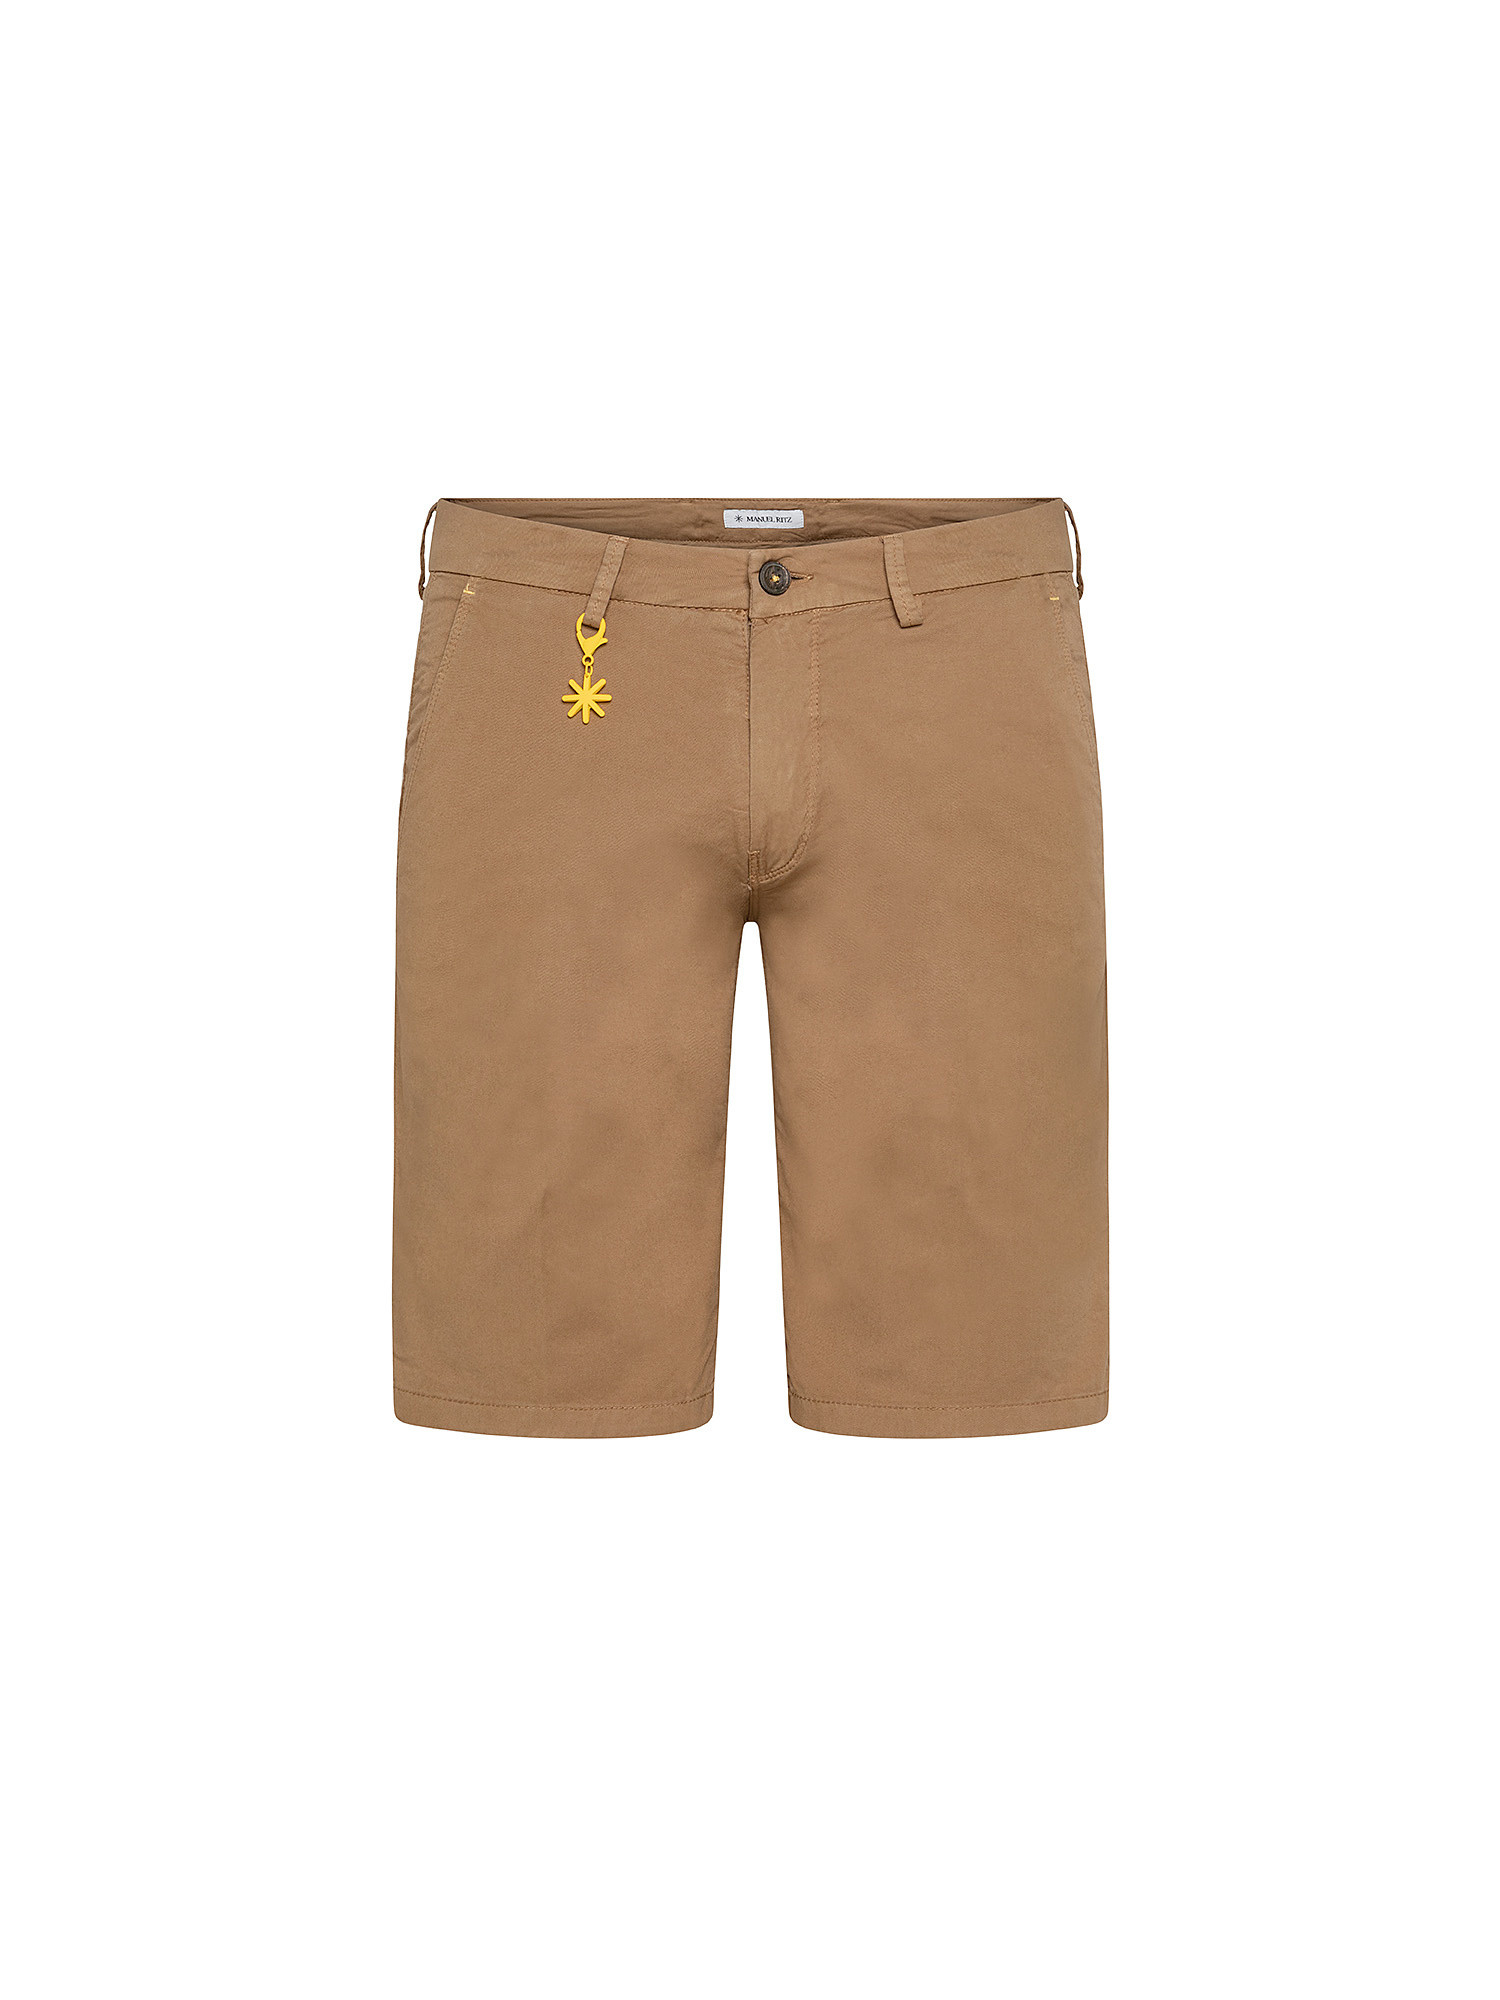 Slim fit dyed cotton bermuda shorts, Light Brown, large image number 0